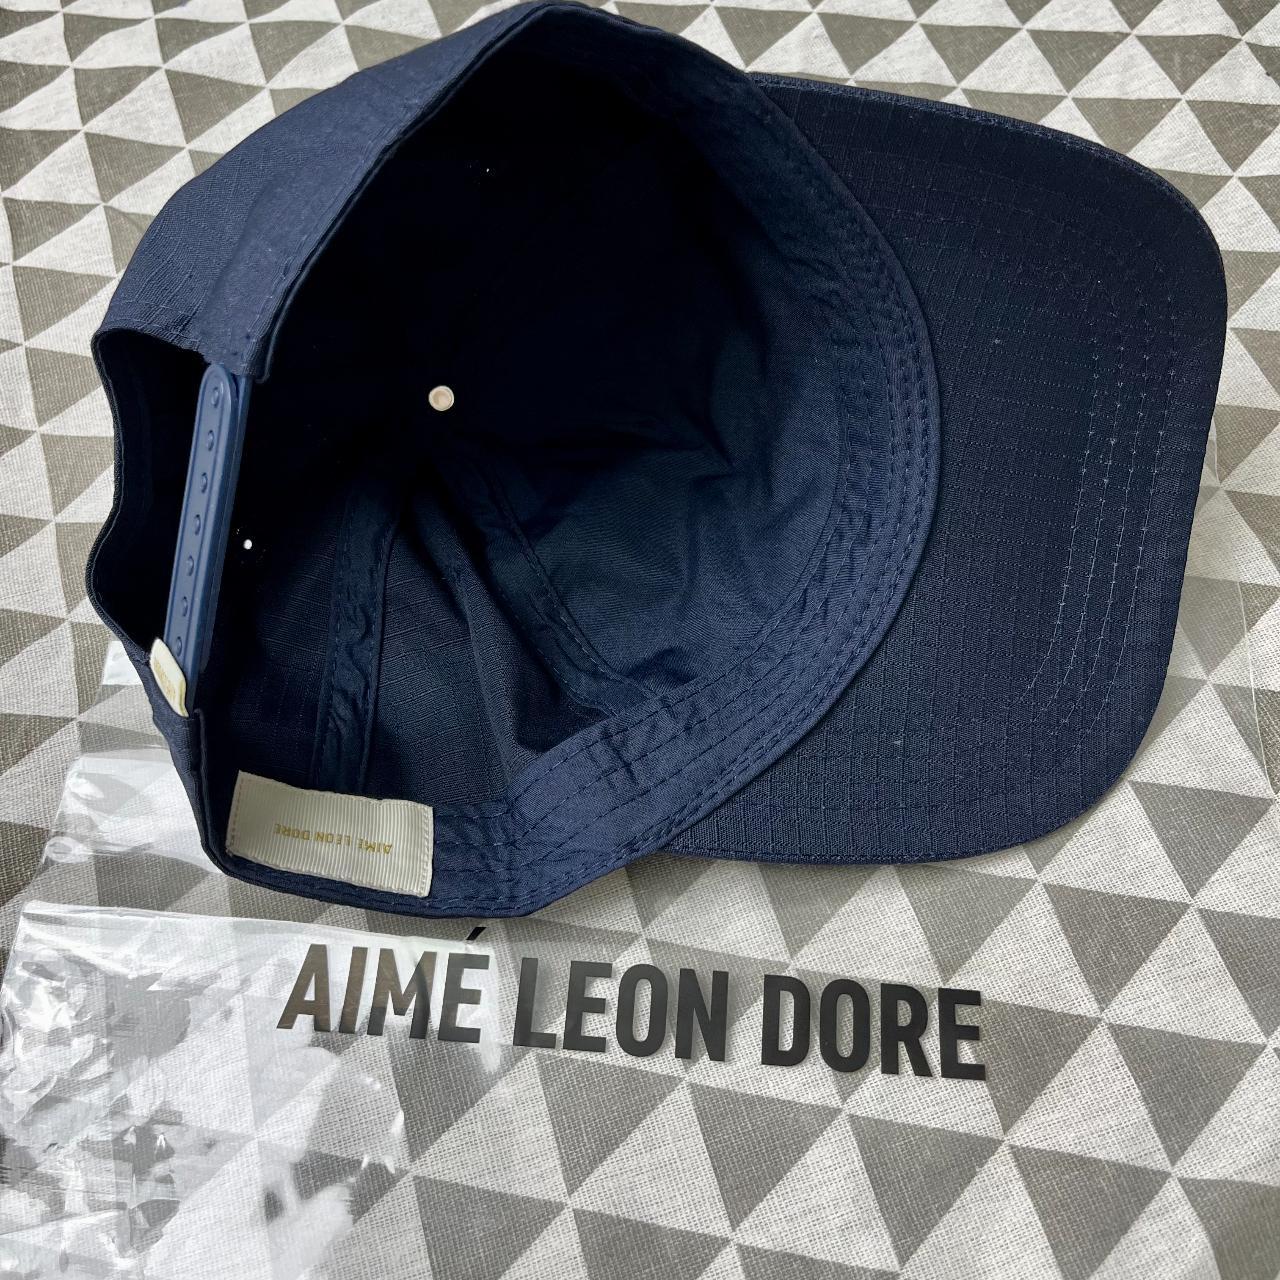 AIME LEON DORE ALD UNISPHERE CAP NAVY One size fits... - Depop